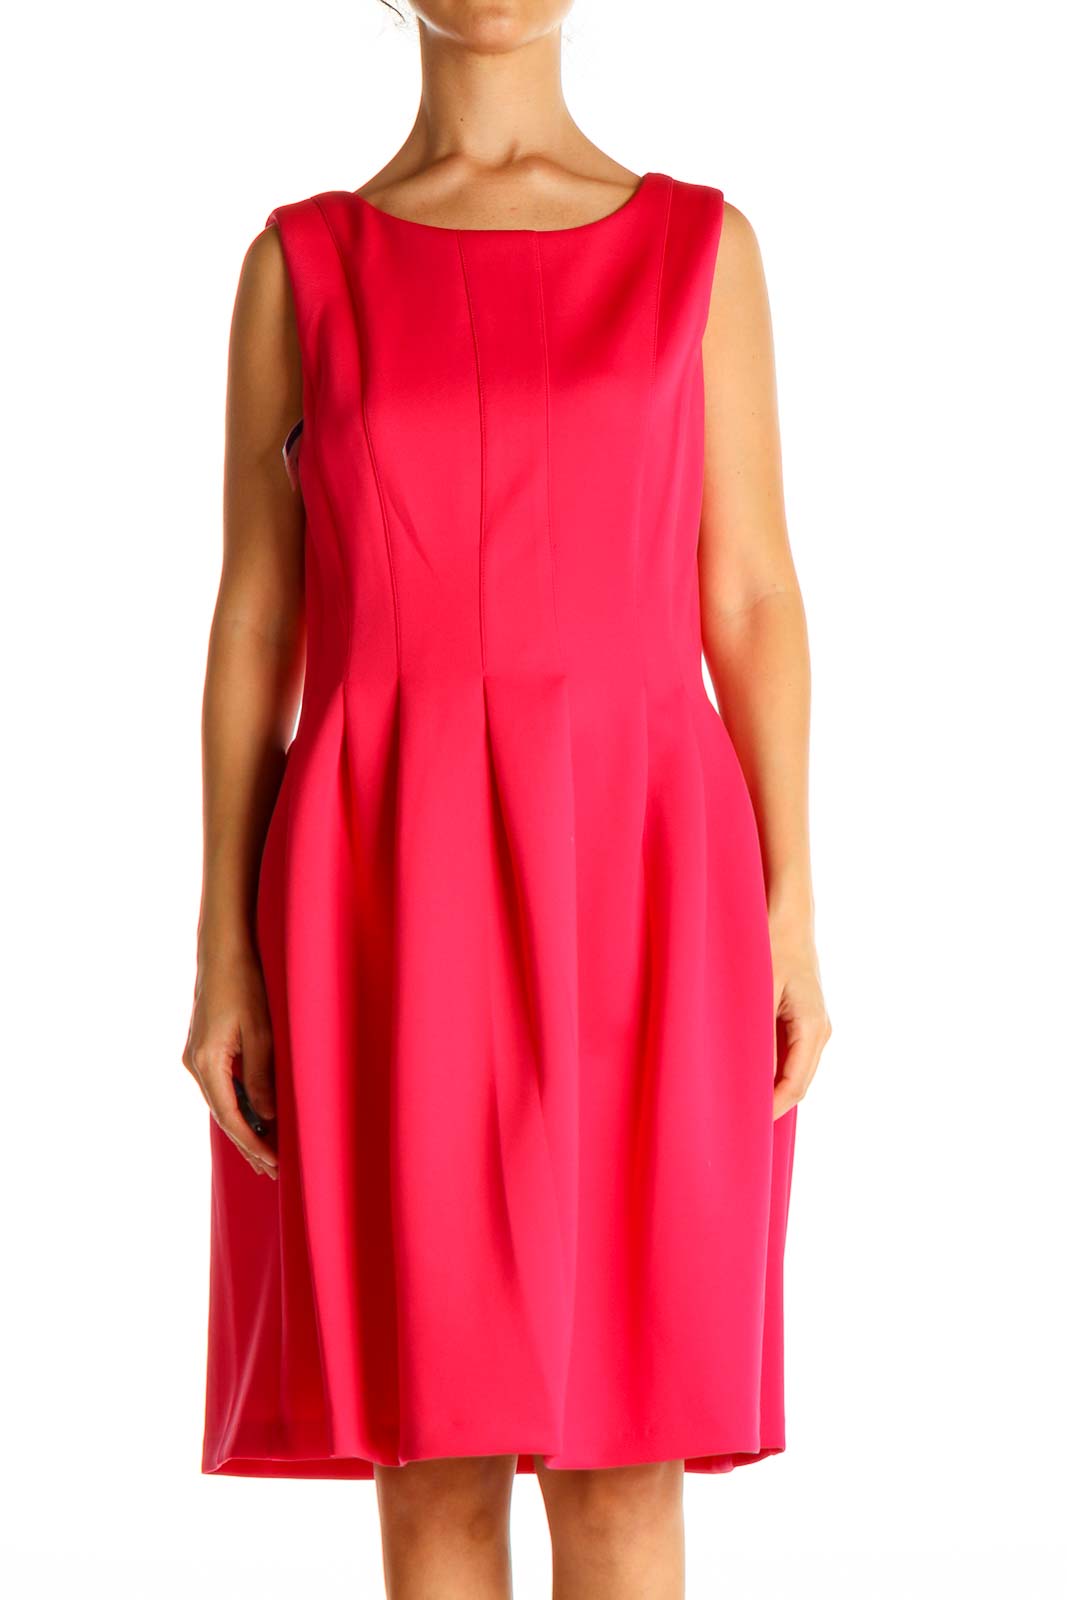 Calvin Klein - Pink Solid Classic Sheath Dress Polyester Spandex | SilkRoll